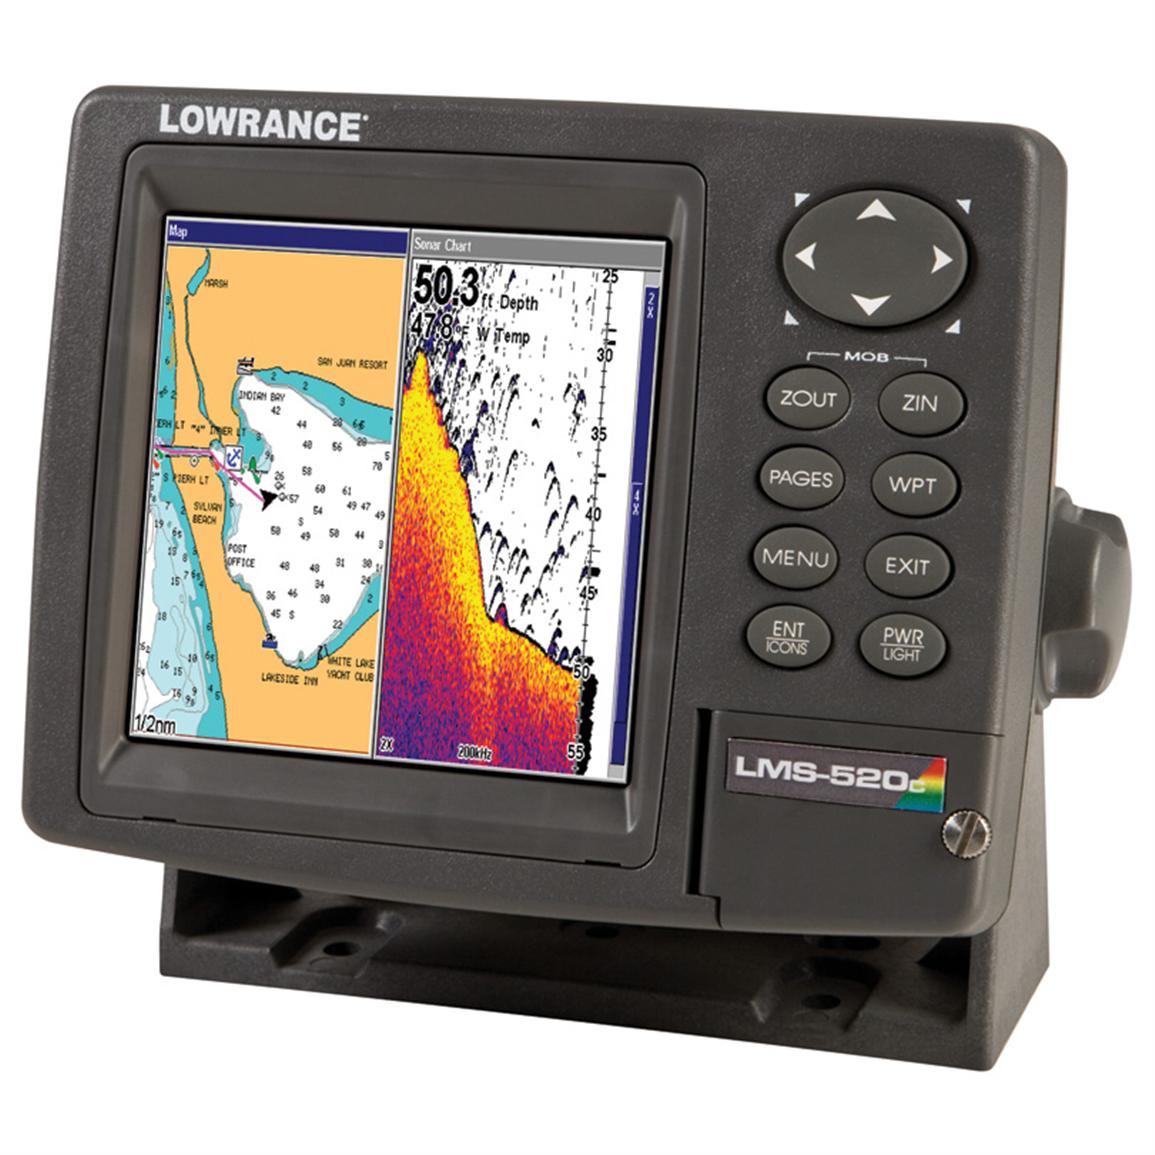 lowrance-lms-520c-gps-chartplotter-fishfinder-head-unit-only